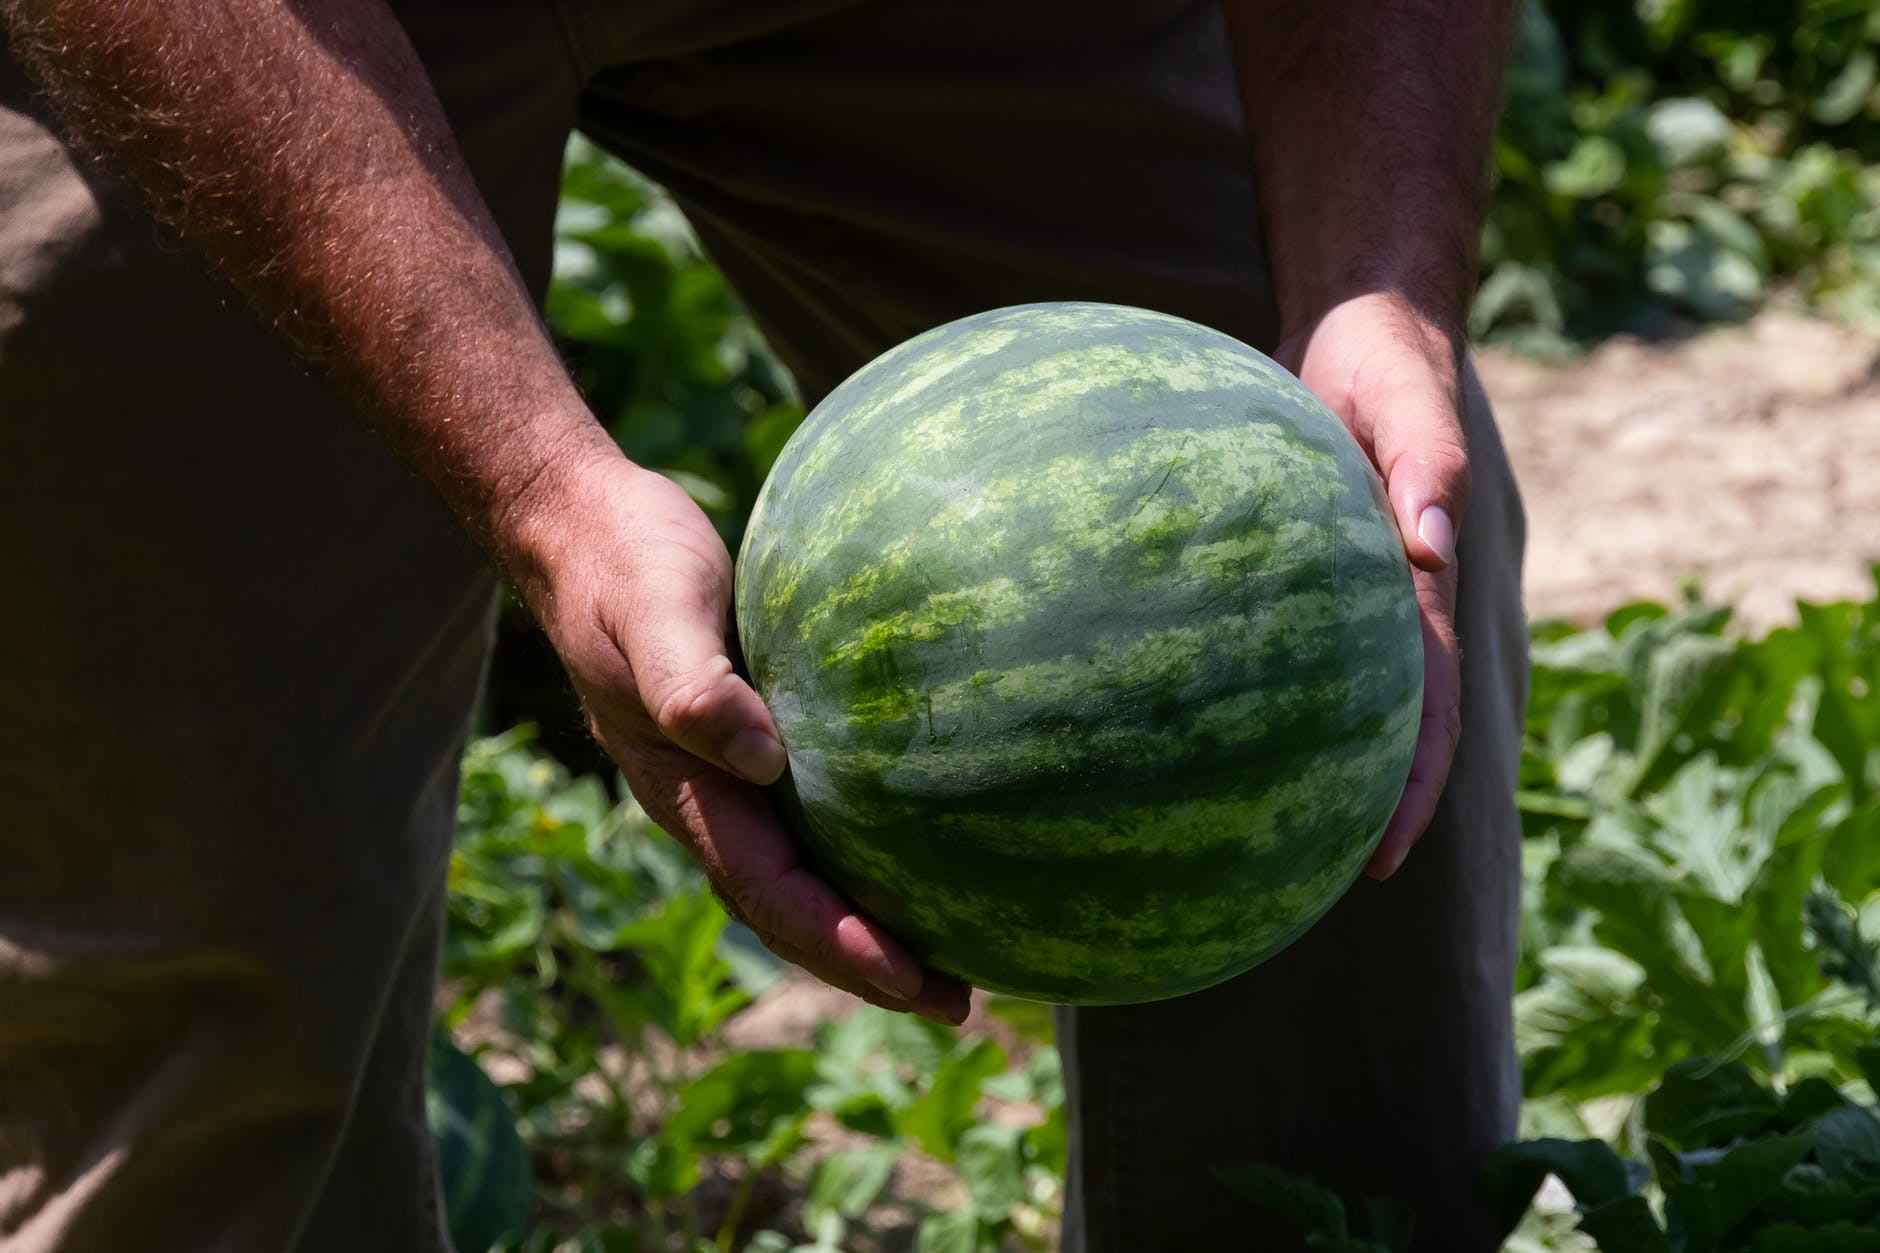 Florida Watermelon